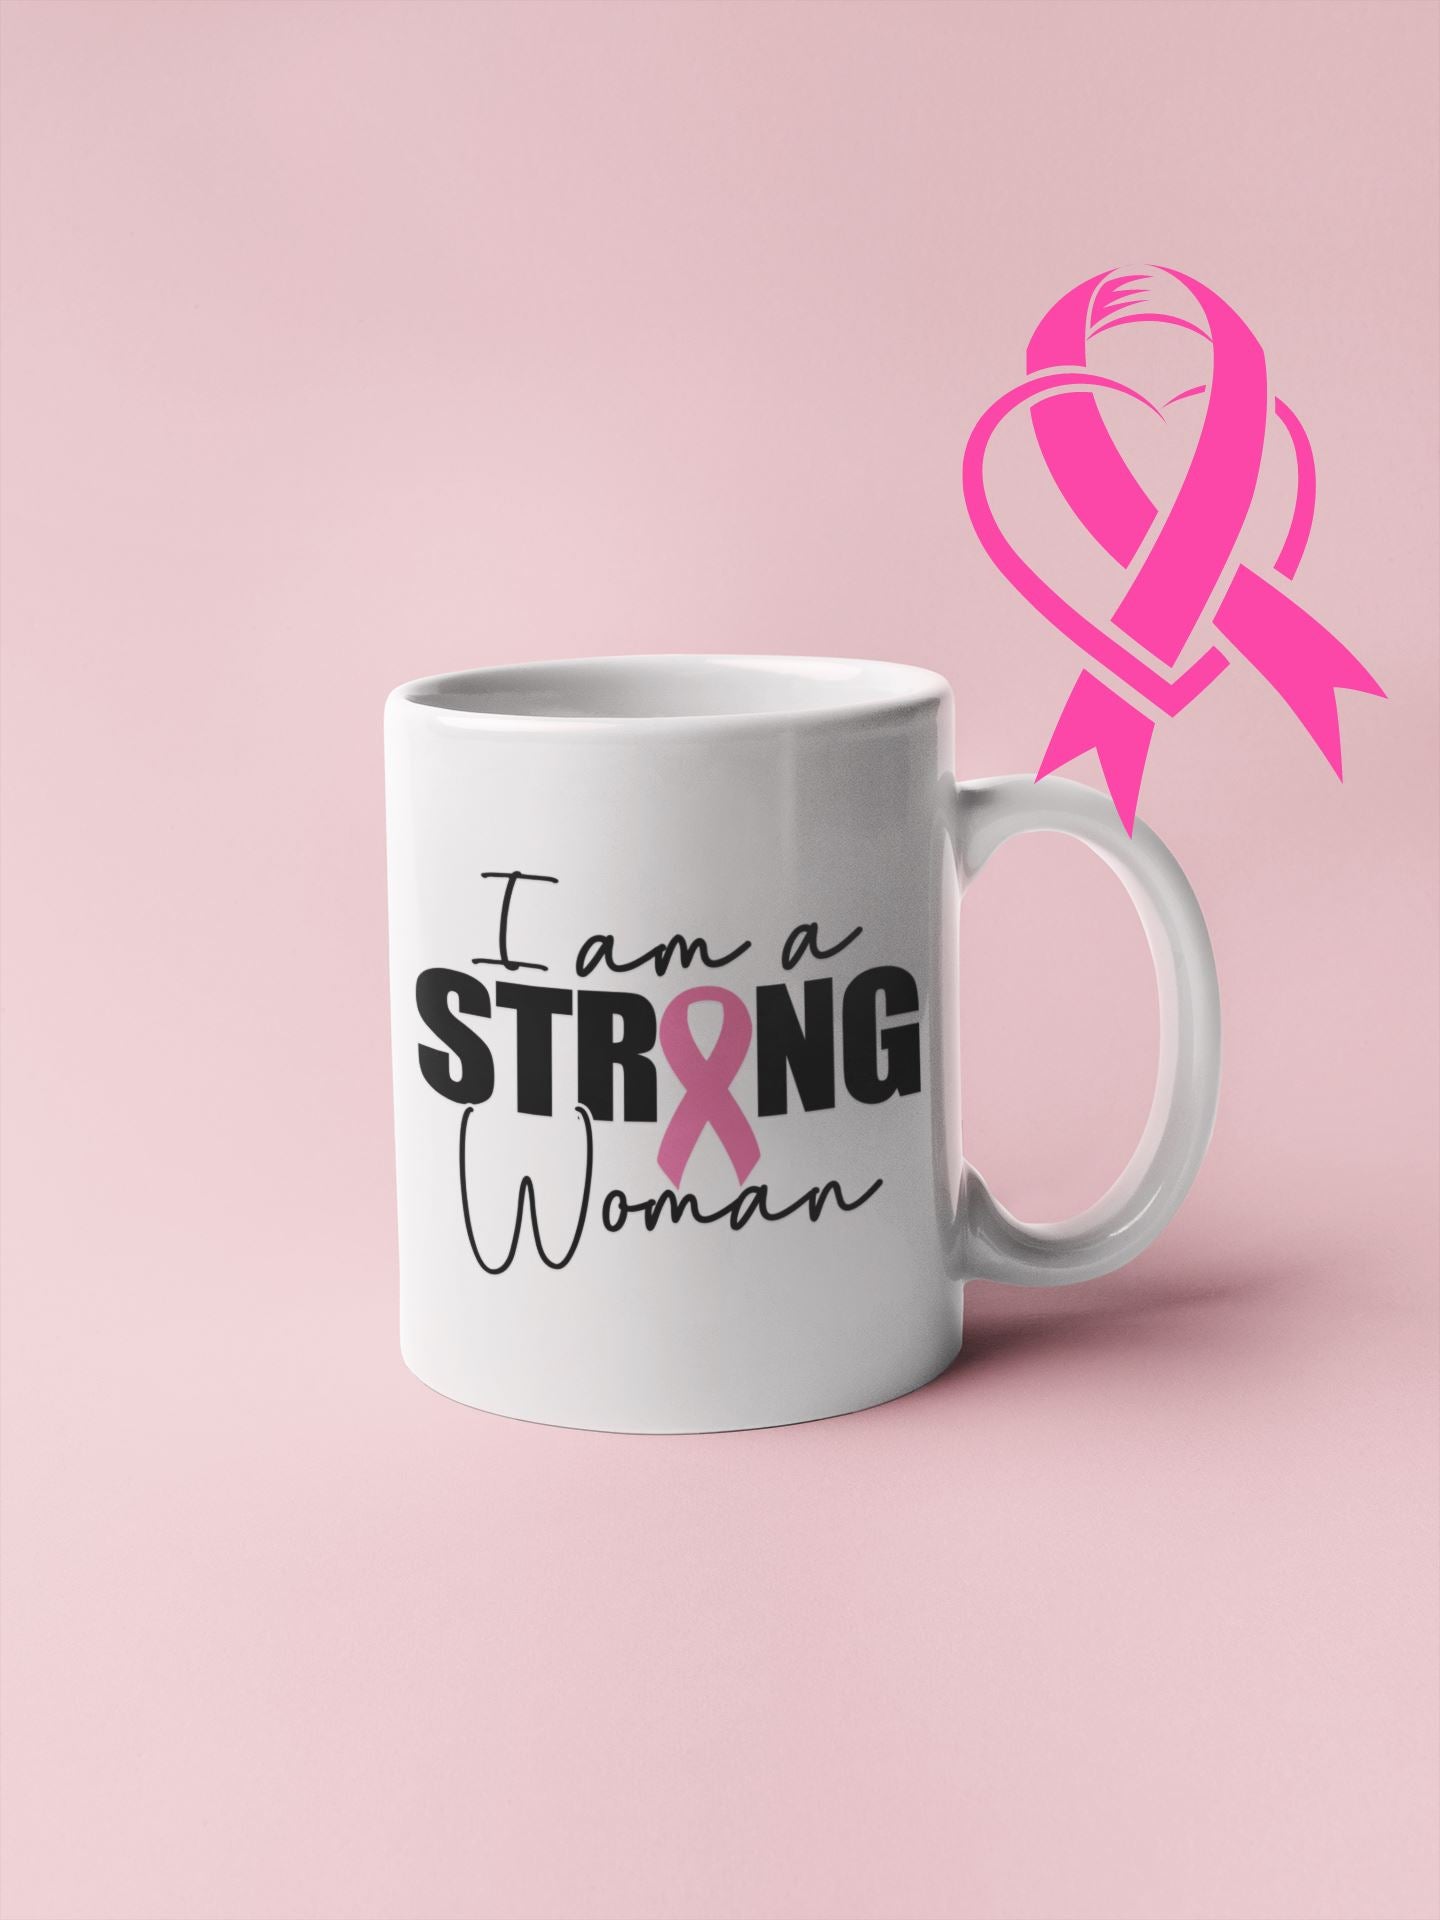 16oz Ceramic Mug Inspired by Breast Cancer Awareness and Survivors, Pink Ribbon Ceramic Mug B1ack By Design LLC 